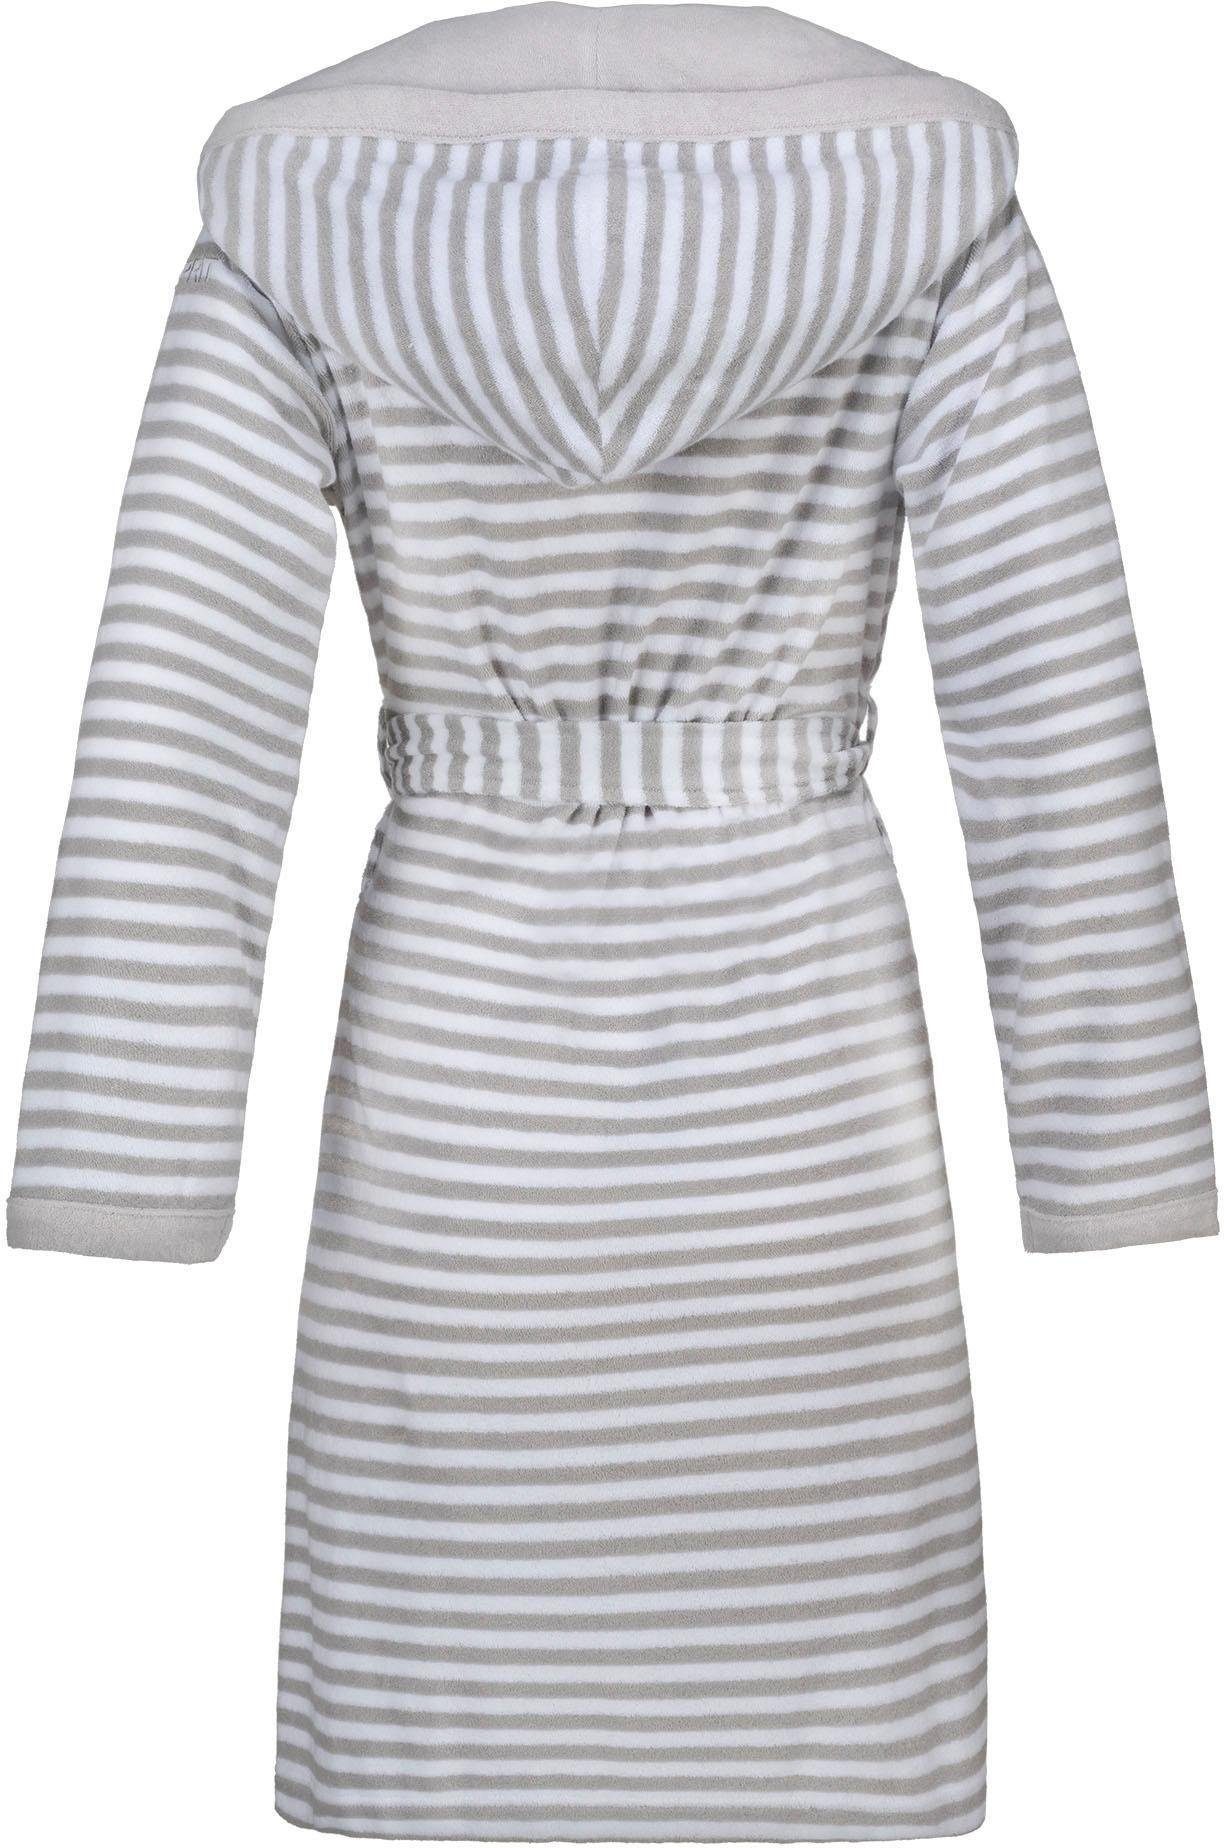 Striped Damenbademantel Hoody, Rundstrickware, Kapuze, stone Gürtel, mit Kurzform, Esprit Kapuze, gestreift